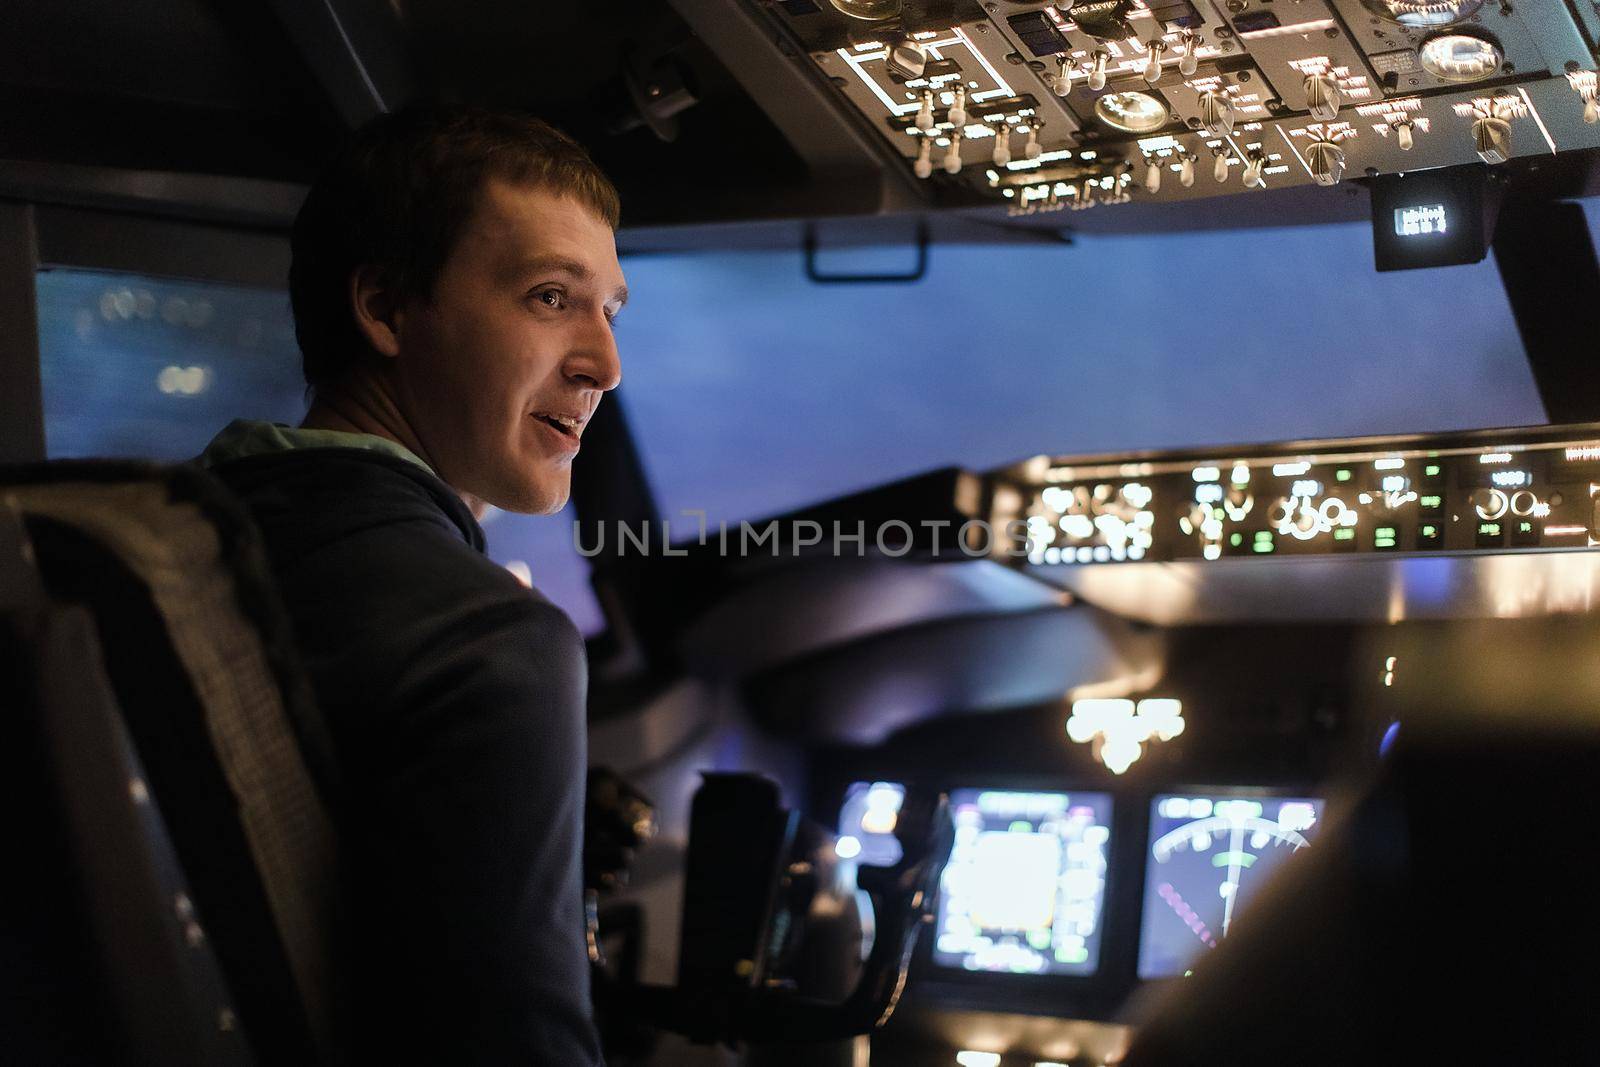 Man pilot plane flight simulator pilots training by Demkat